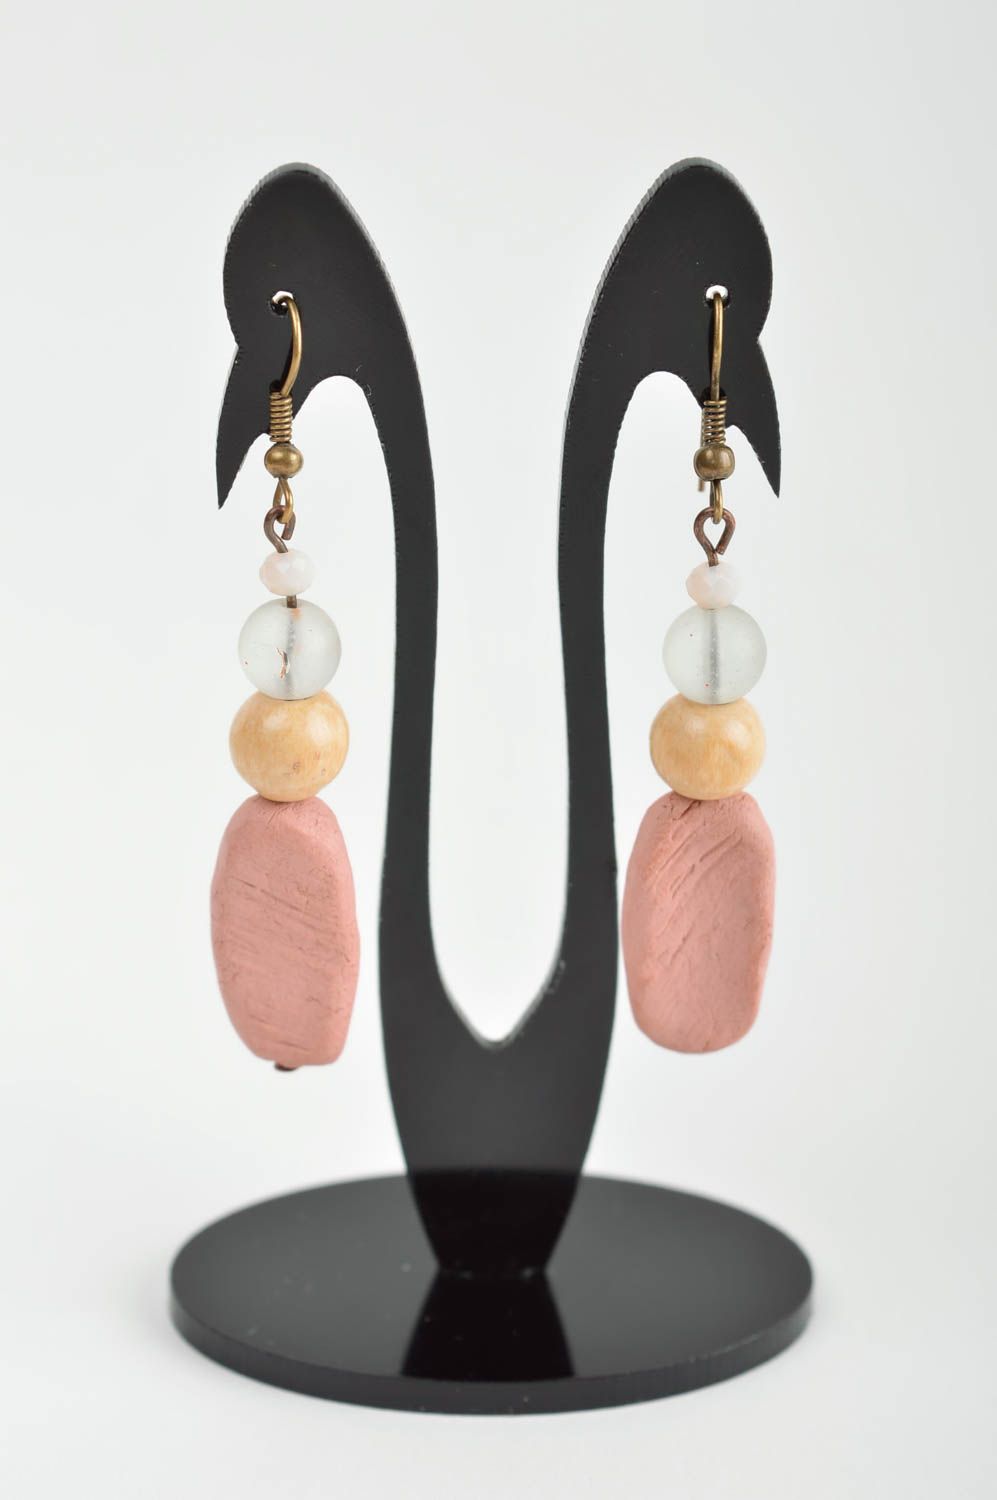 Unusual handmade plastic earrings fashion accessories cool jewelry designs photo 2